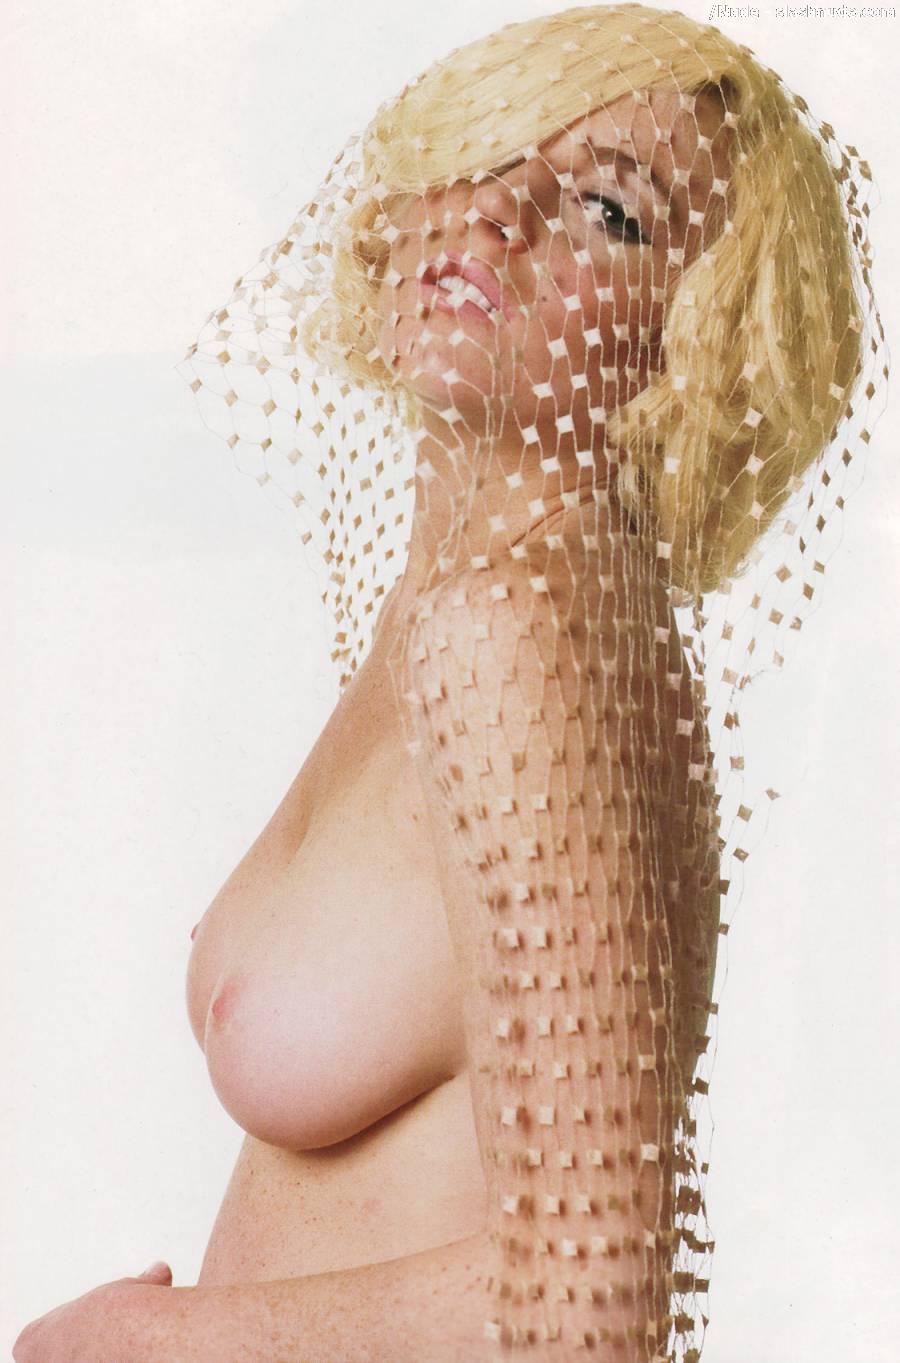 Recent Lindsay Lohan Nude